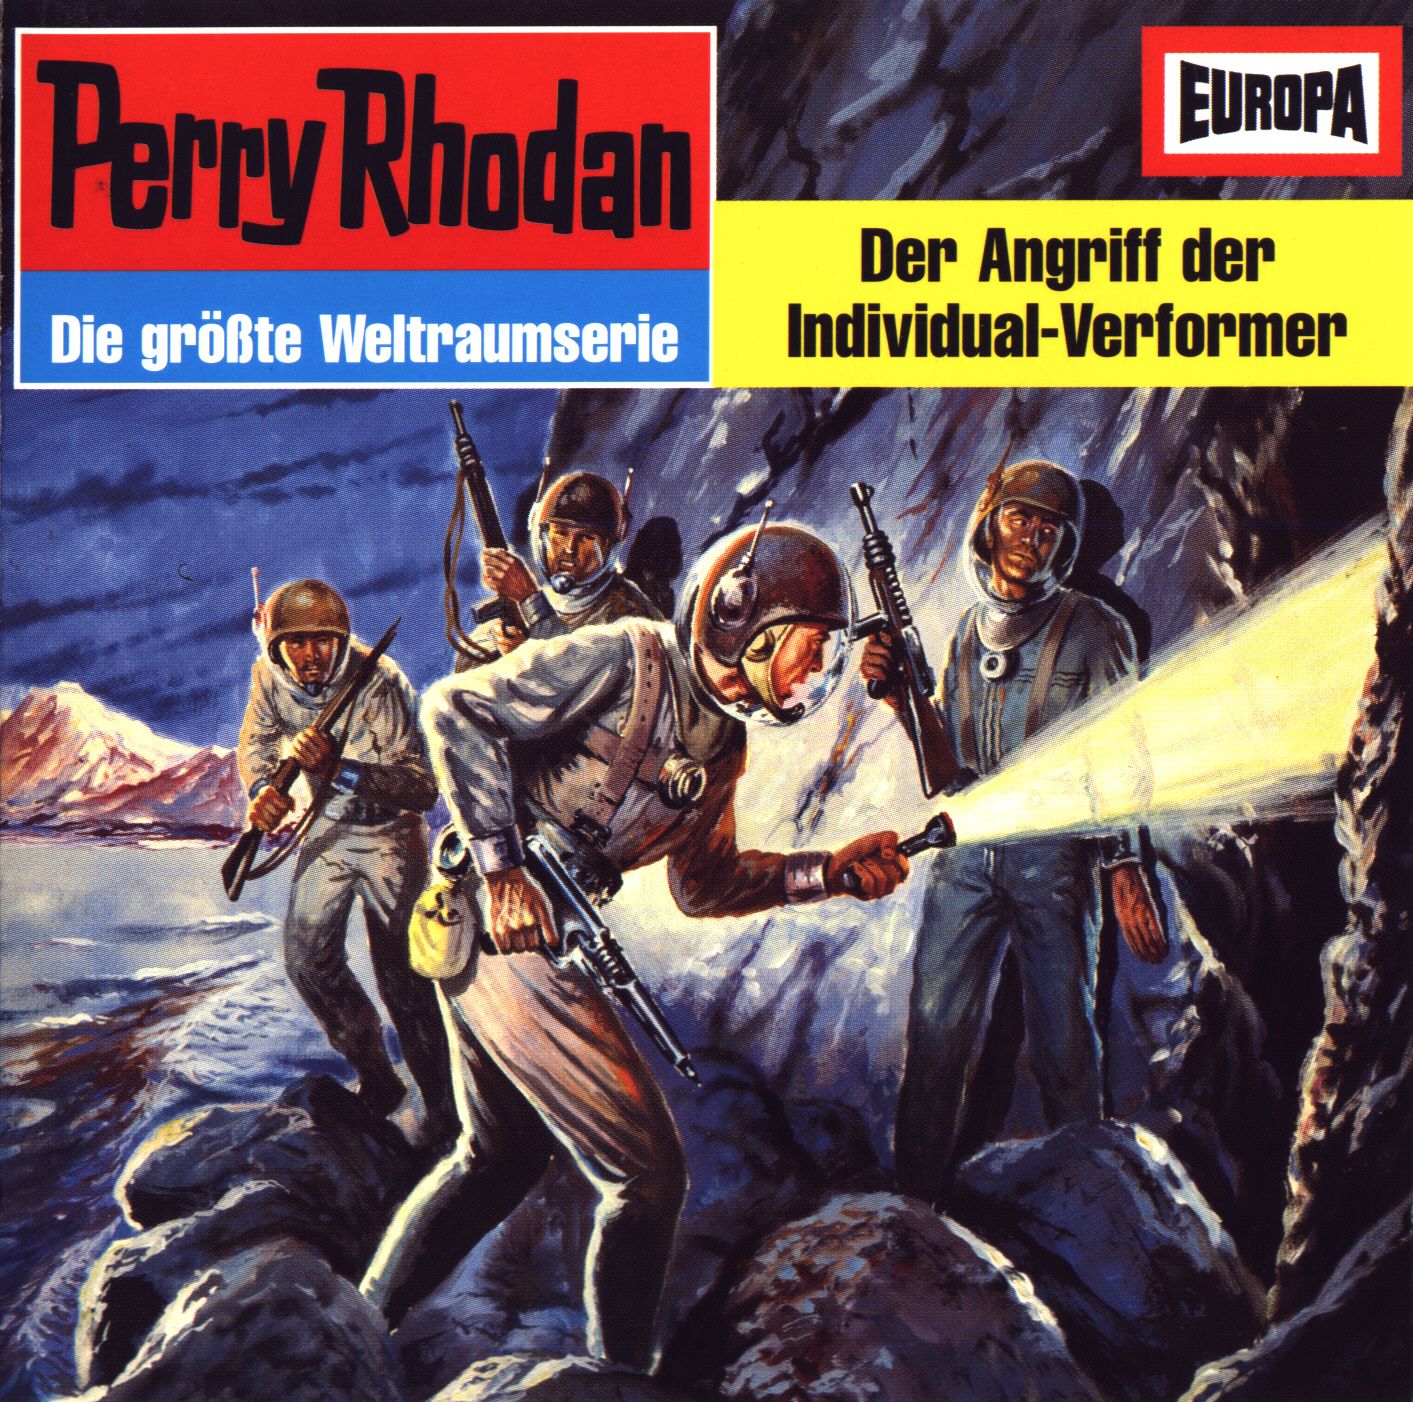 Perry Rhodan - Der Angriff der Individual-Verformer